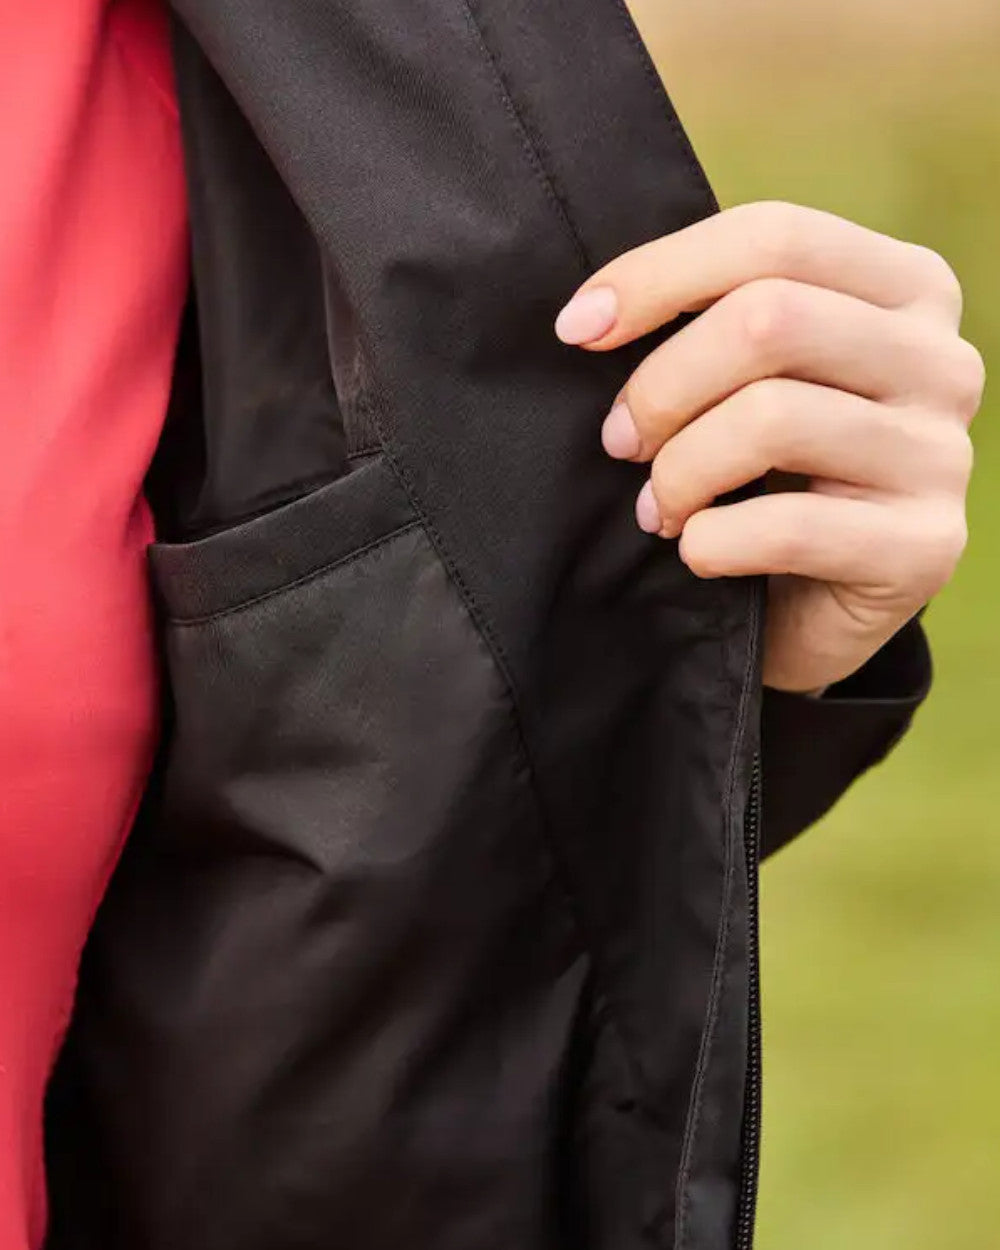 Black Coloured WeatherBeeta Jackson Waterproof Jacket On A Field  Background 